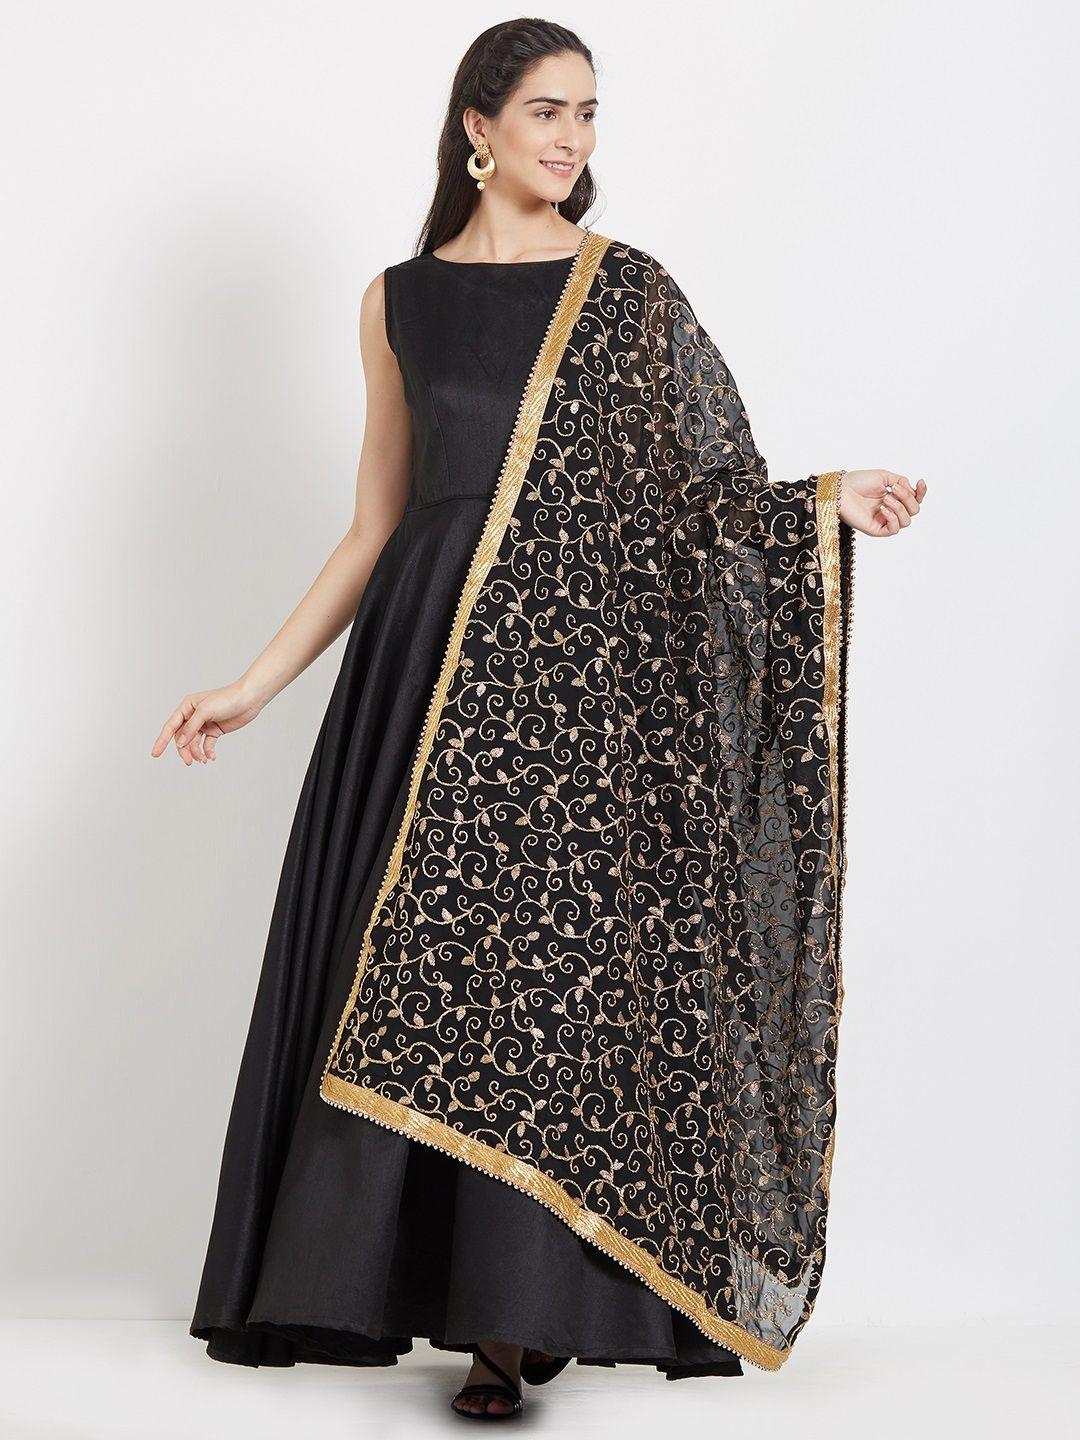 dupatta-bazaar-black-&-gold-toned-embroidered-dupatta